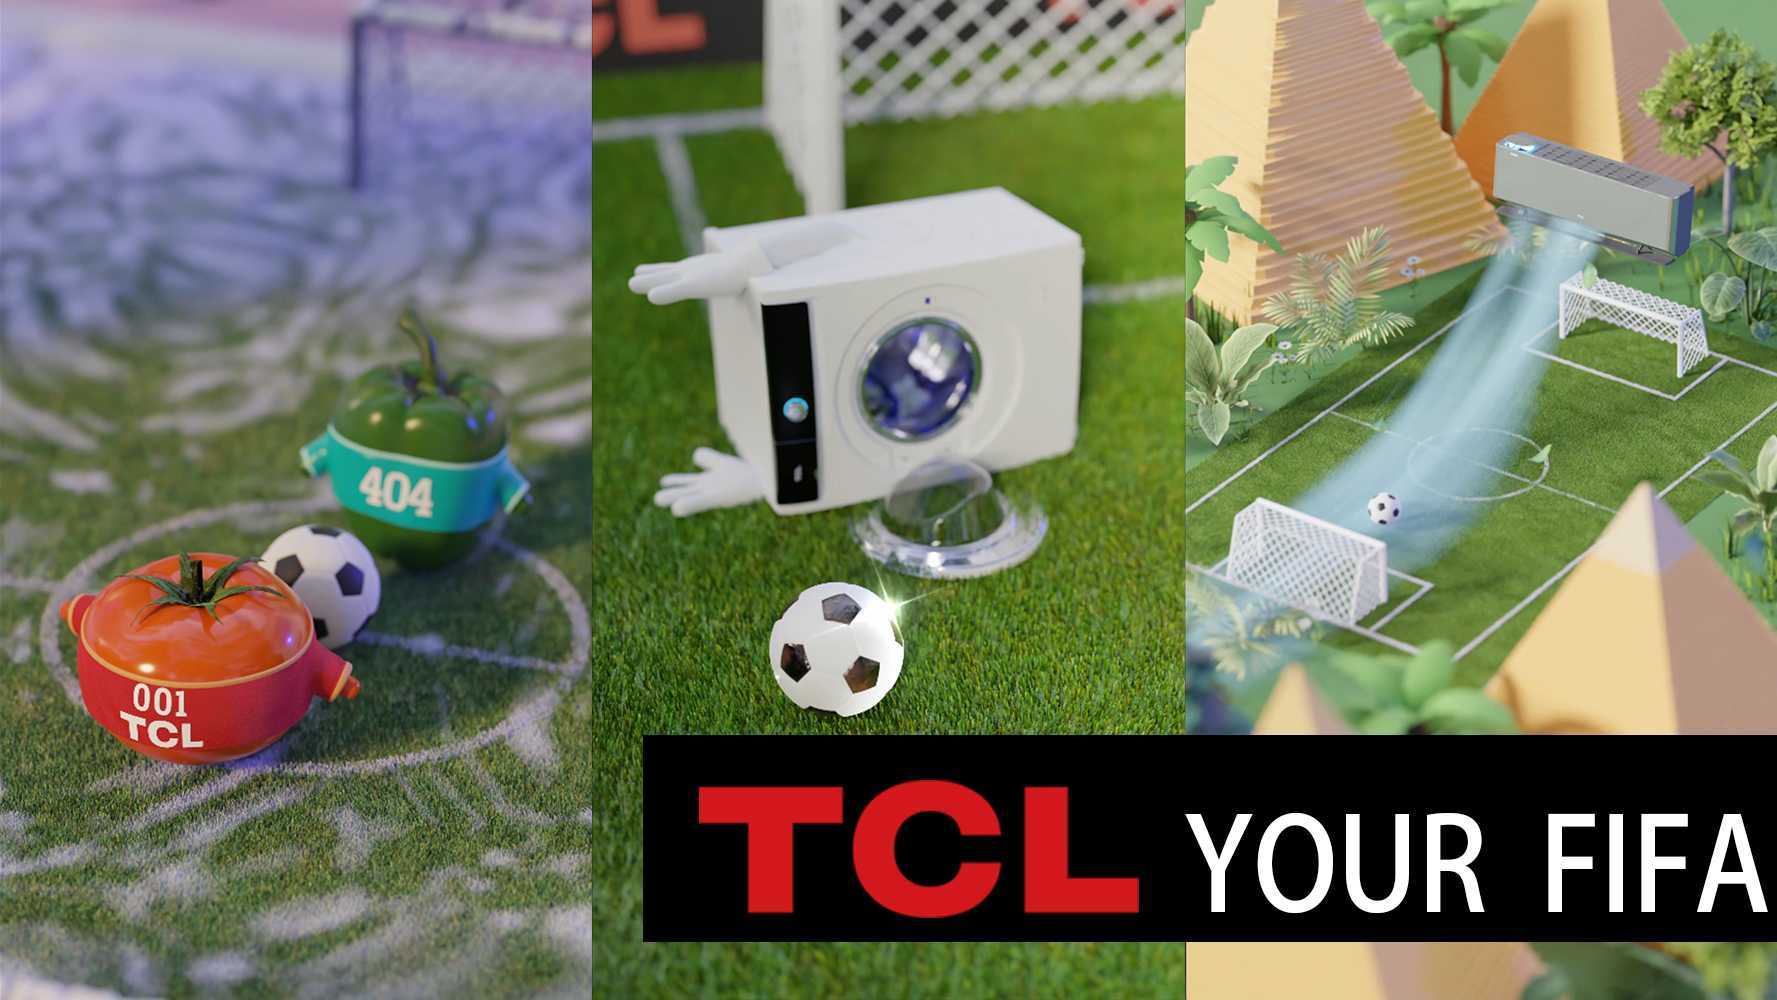 TCL-世界杯海外抖音11月短视频系列《TCL YOUR FIFA》